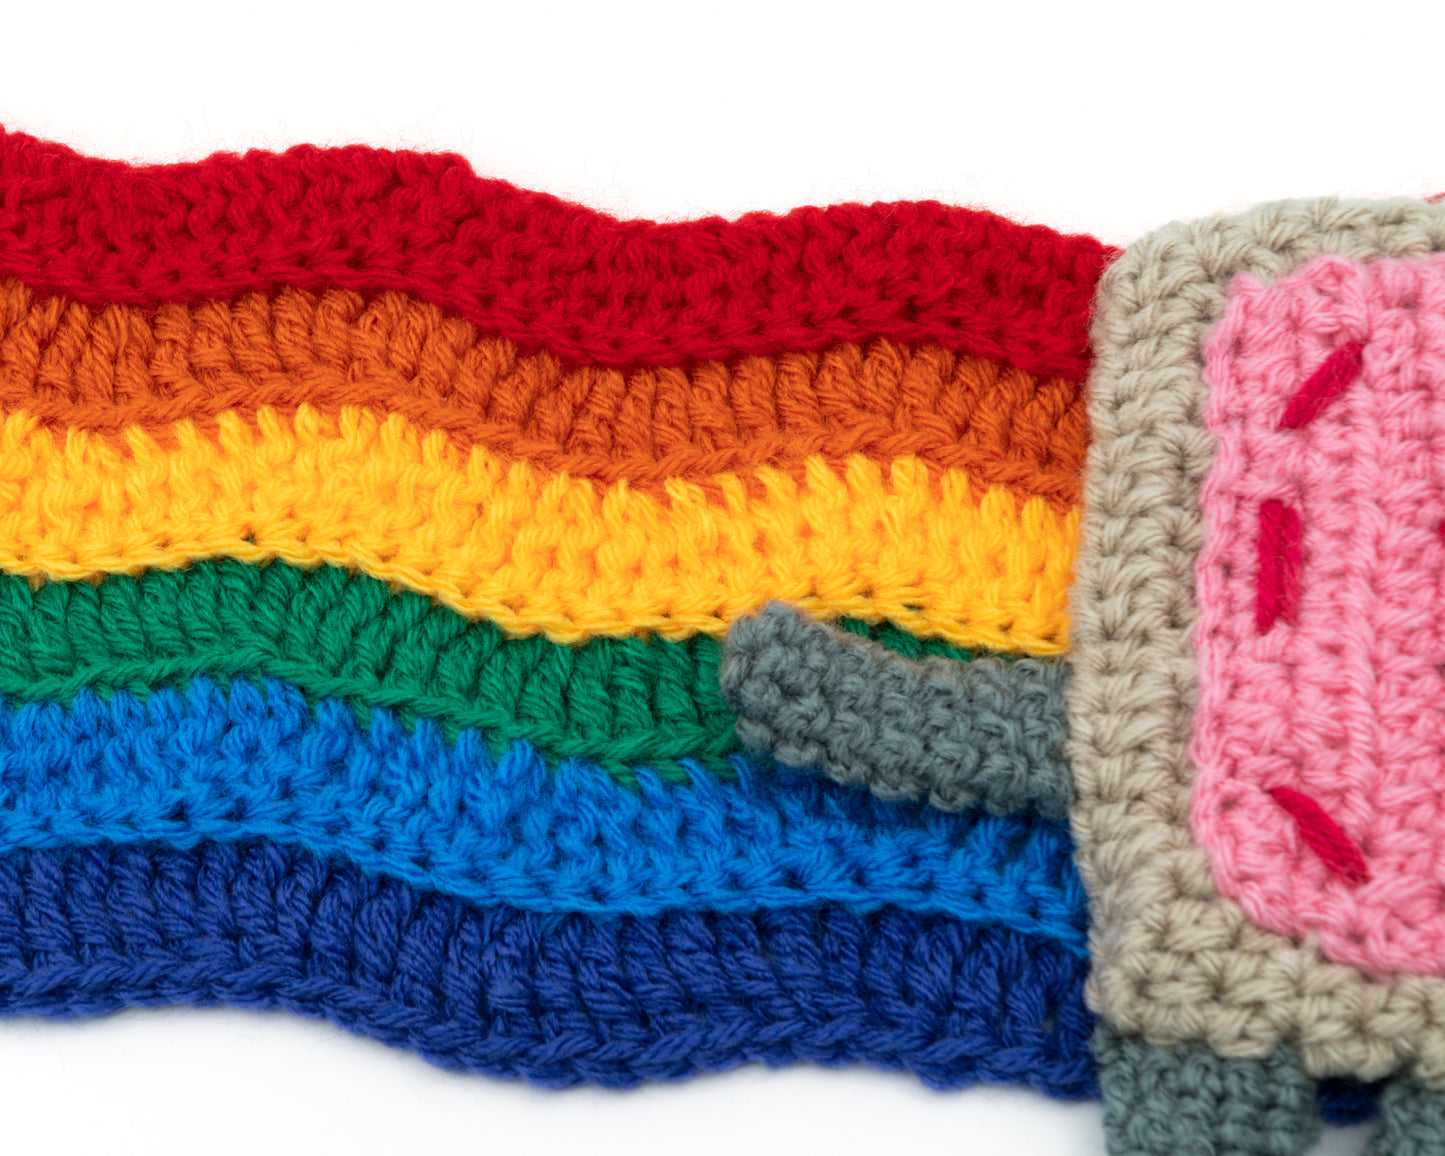 amigurumi crochet nyan cat scarf pattern close up of the rainbow